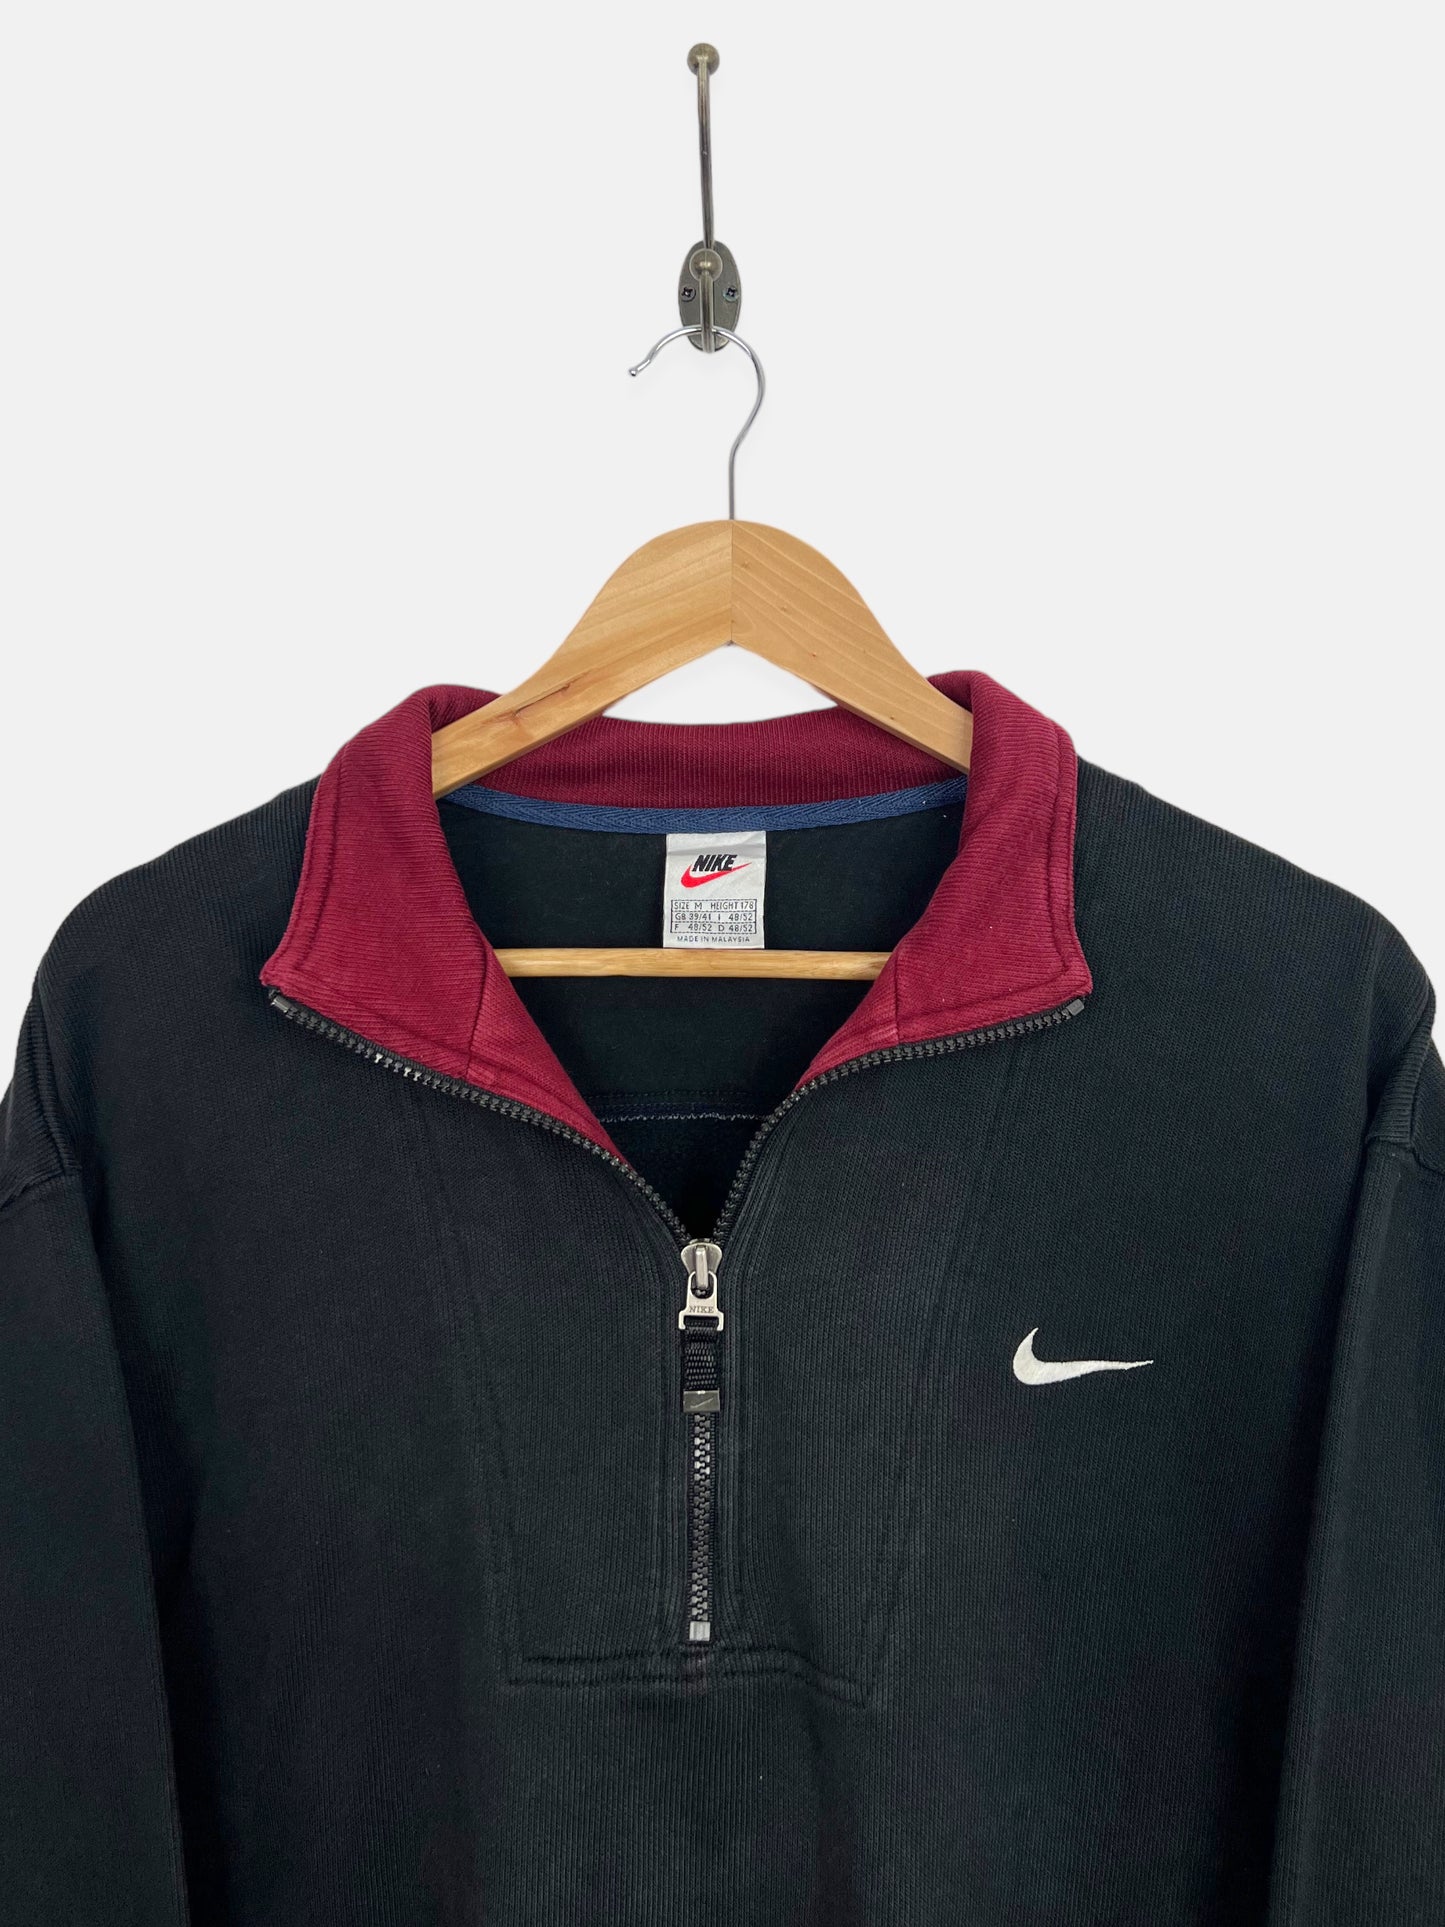 90's Nike Embroidered Vintage Quarterzip Sweatshirt Size 12-14